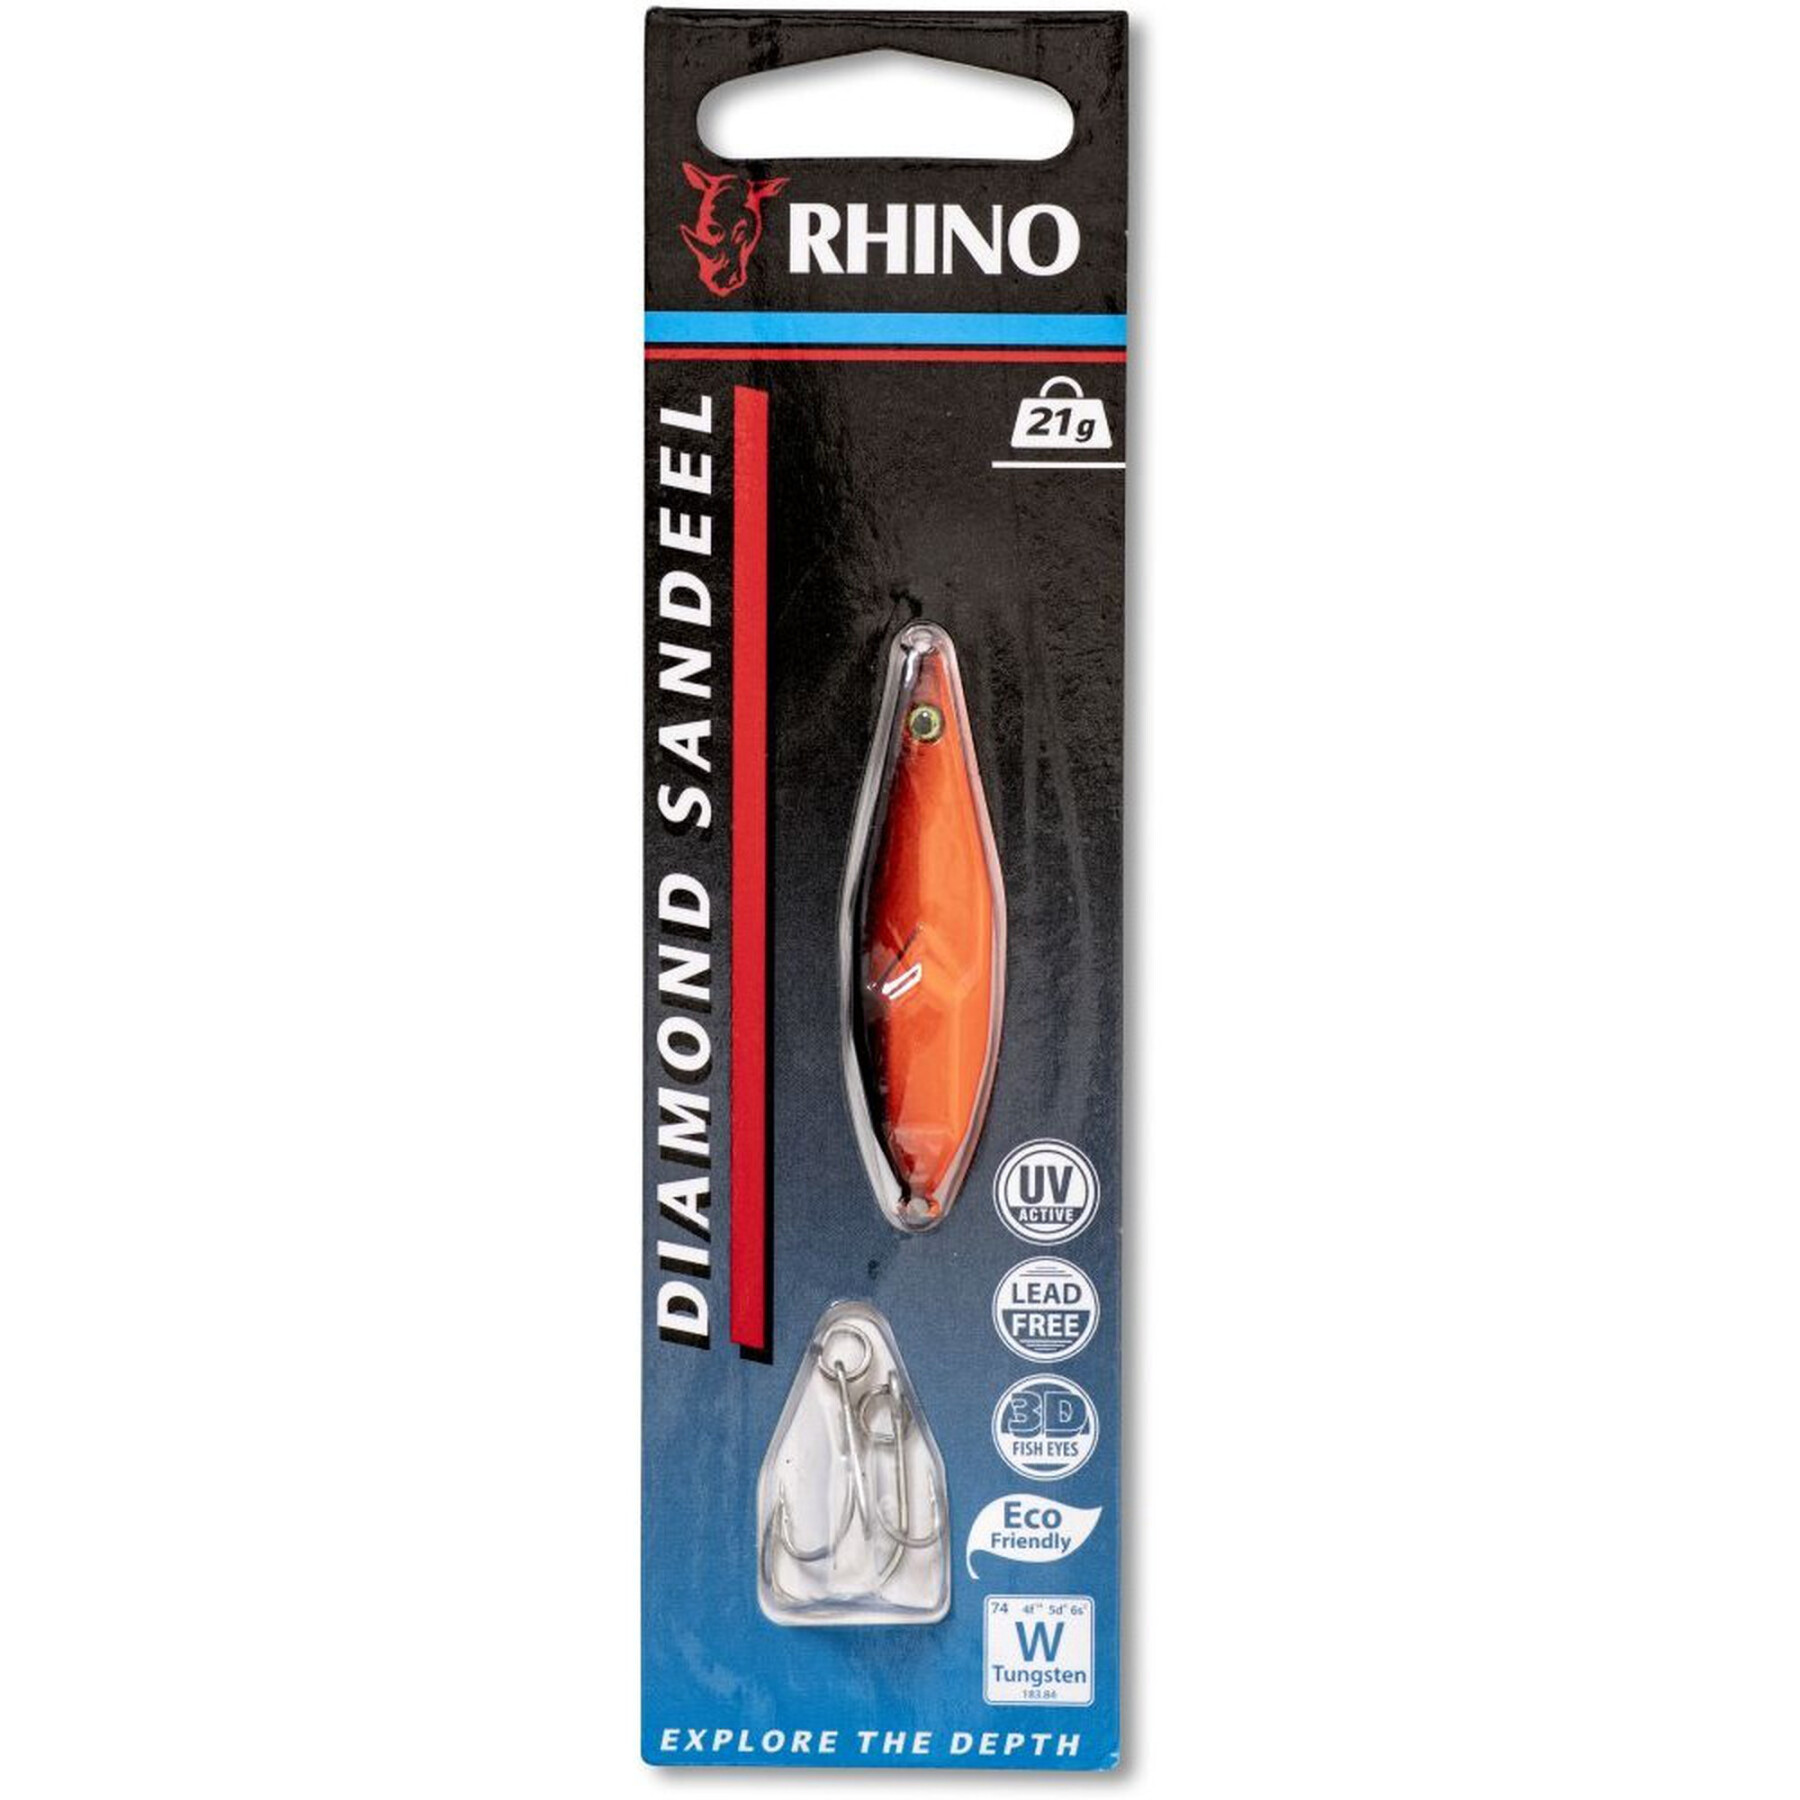 Atraer a Rhino Diamond Sandeel – 21g